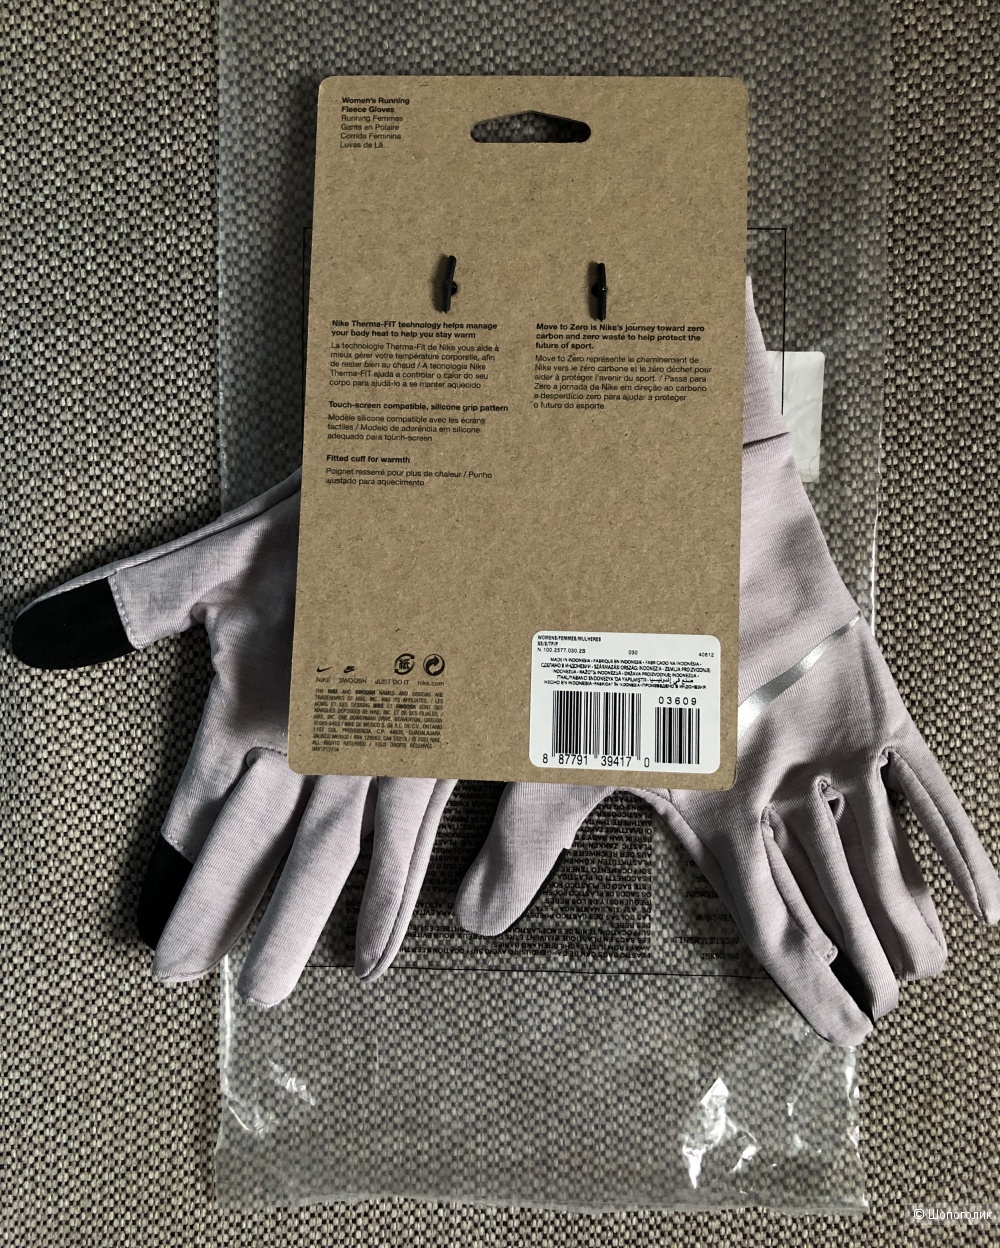 Перчатки Nike Terma-Fit Fleece Gloves, XS-S